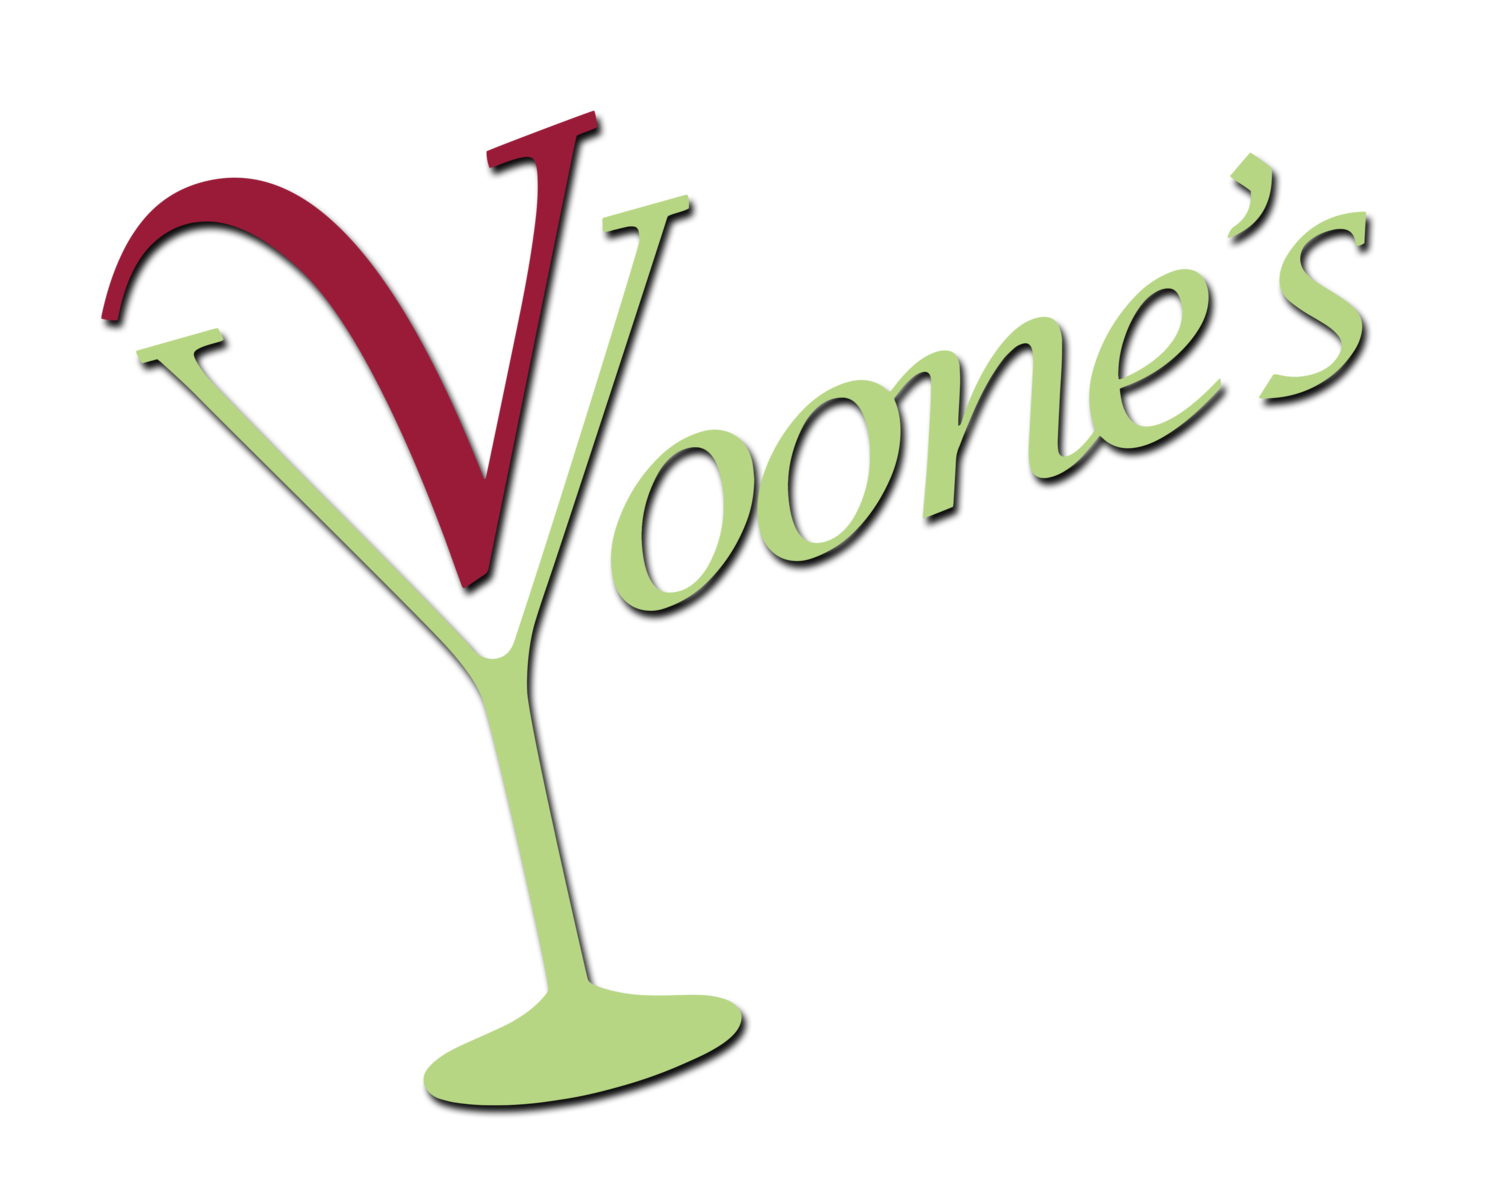 Vyoone's logo scroll